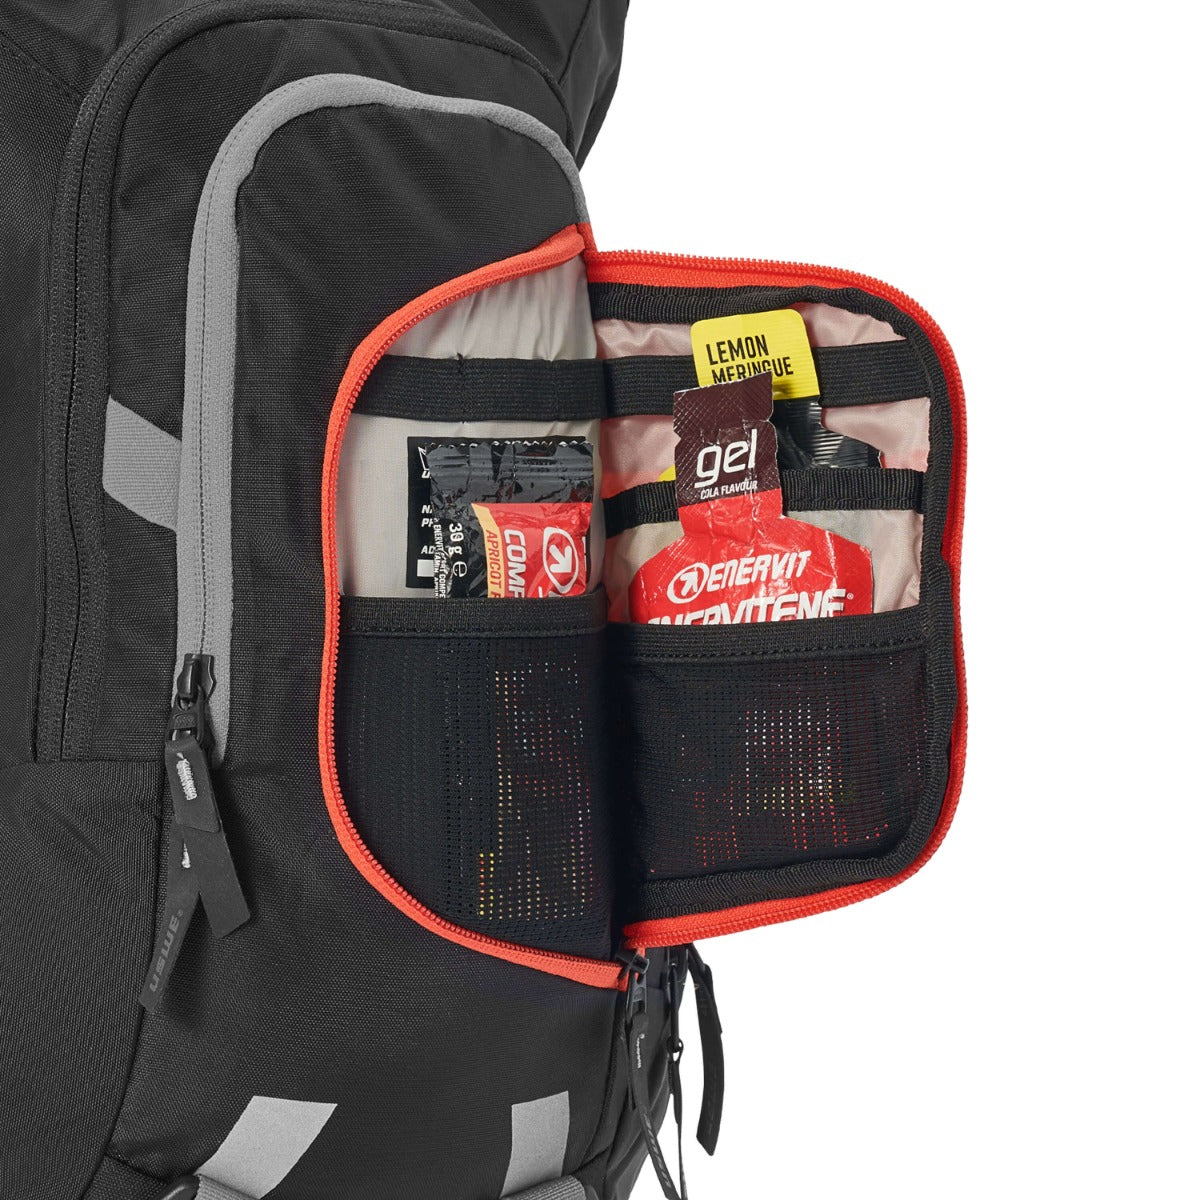 USWE - Raw 12 Hydration Backpack